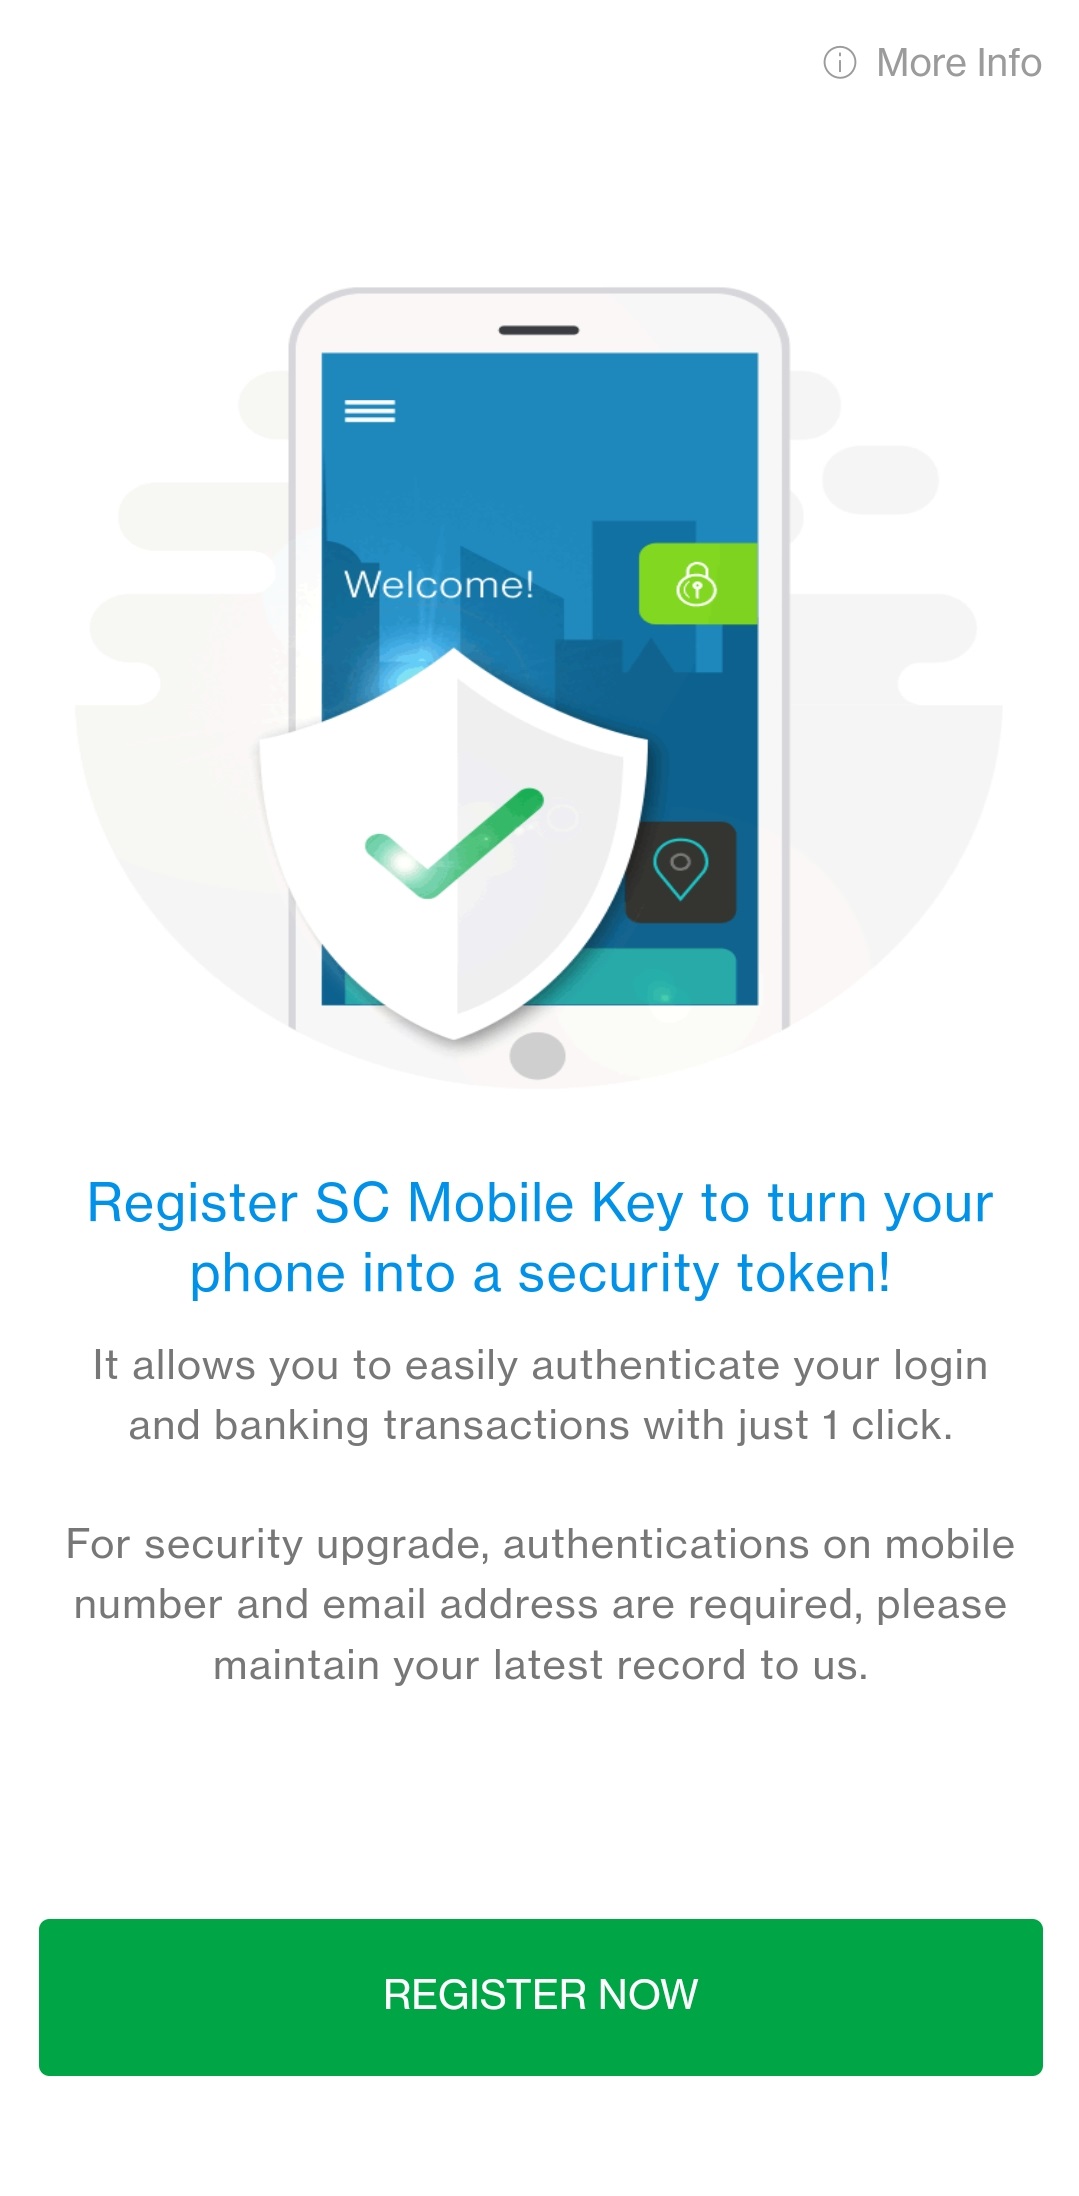 How to register SC Mobile Key Step 1